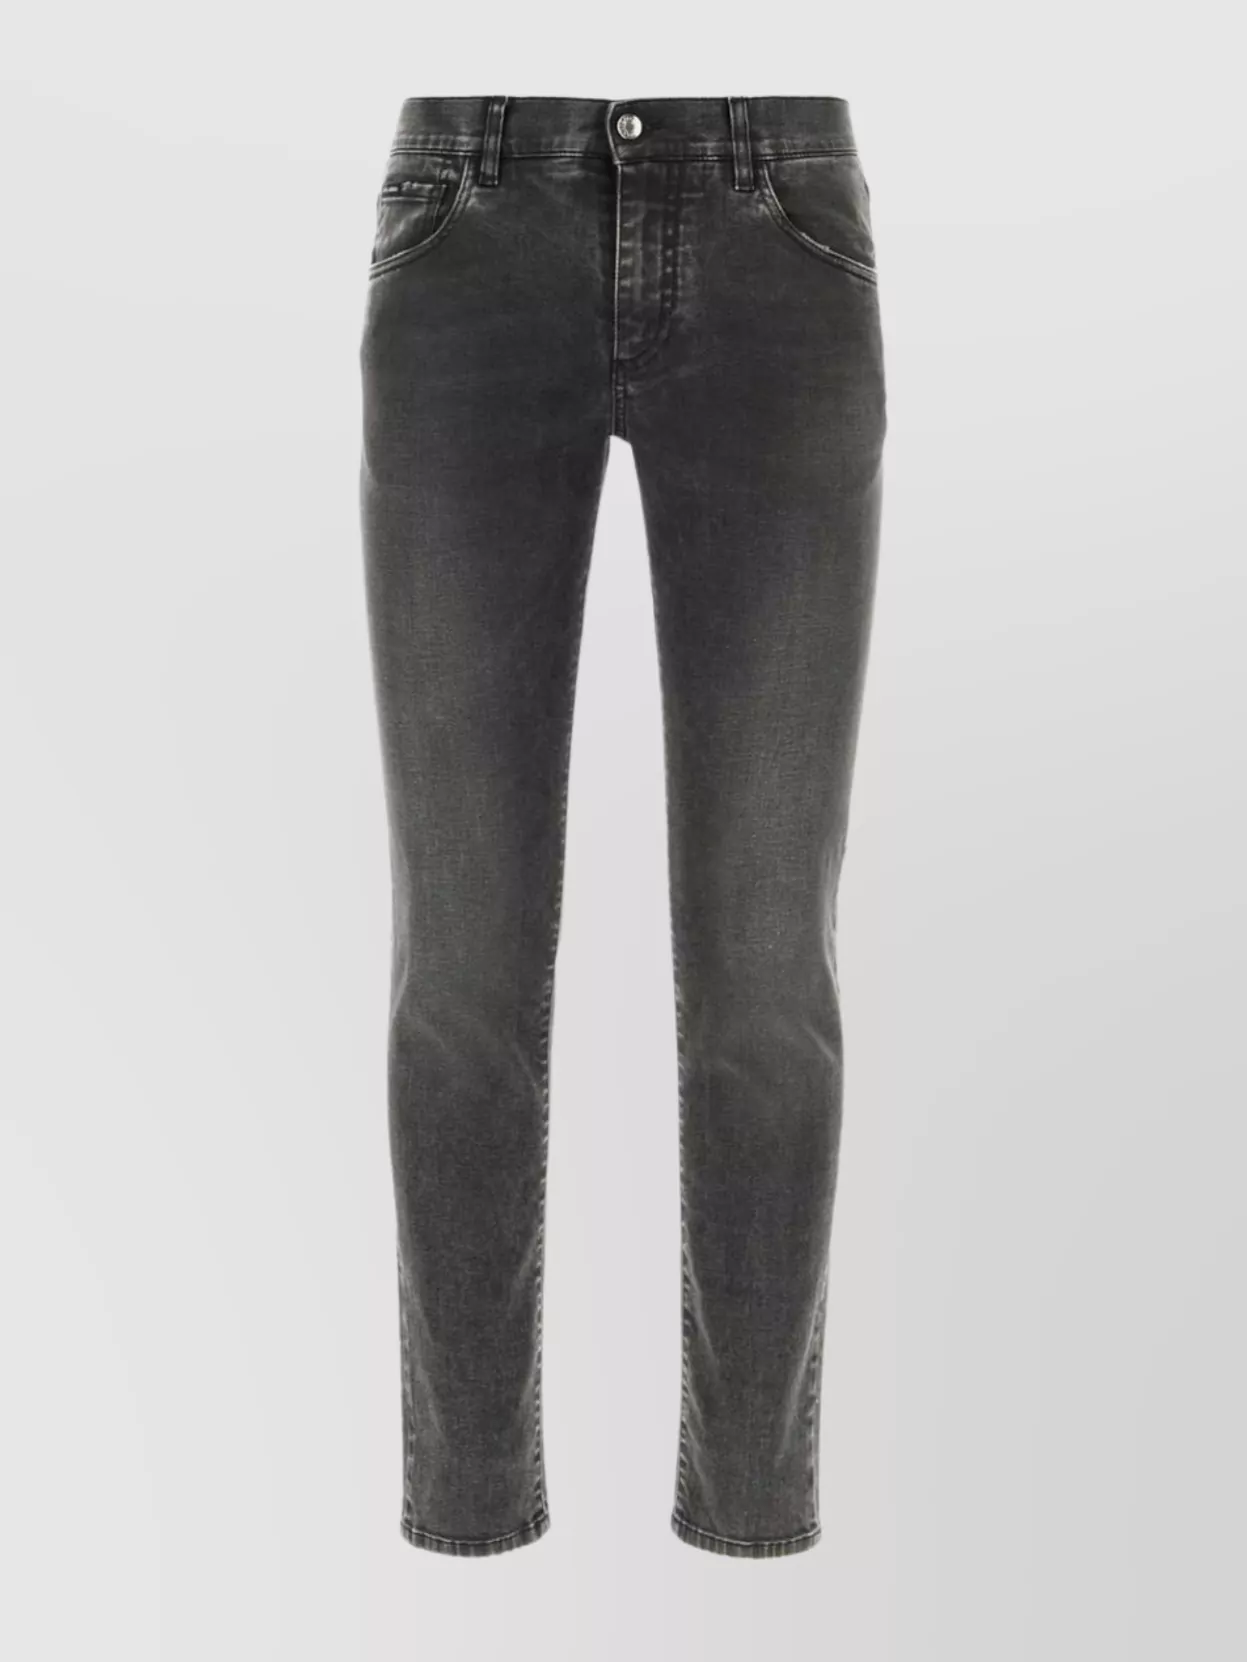 Dolce & Gabbana Stretch Denim Jeans Faded Wash In Black